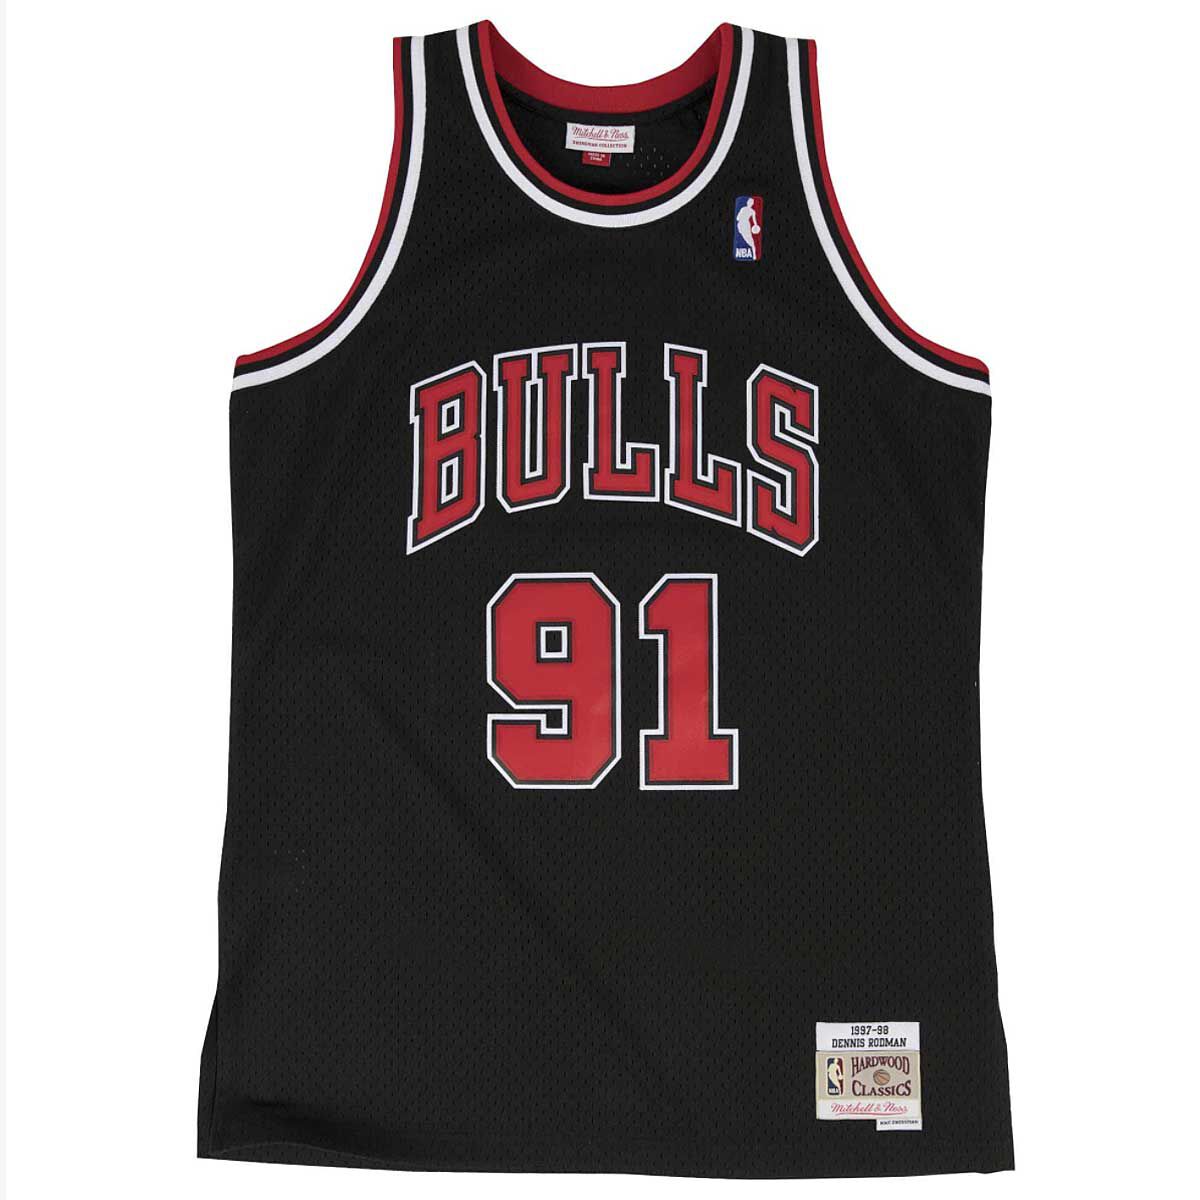 NEW Chicago Bulls #91 Dennis Rodman Retro Basketball Jersey Black/stripes 